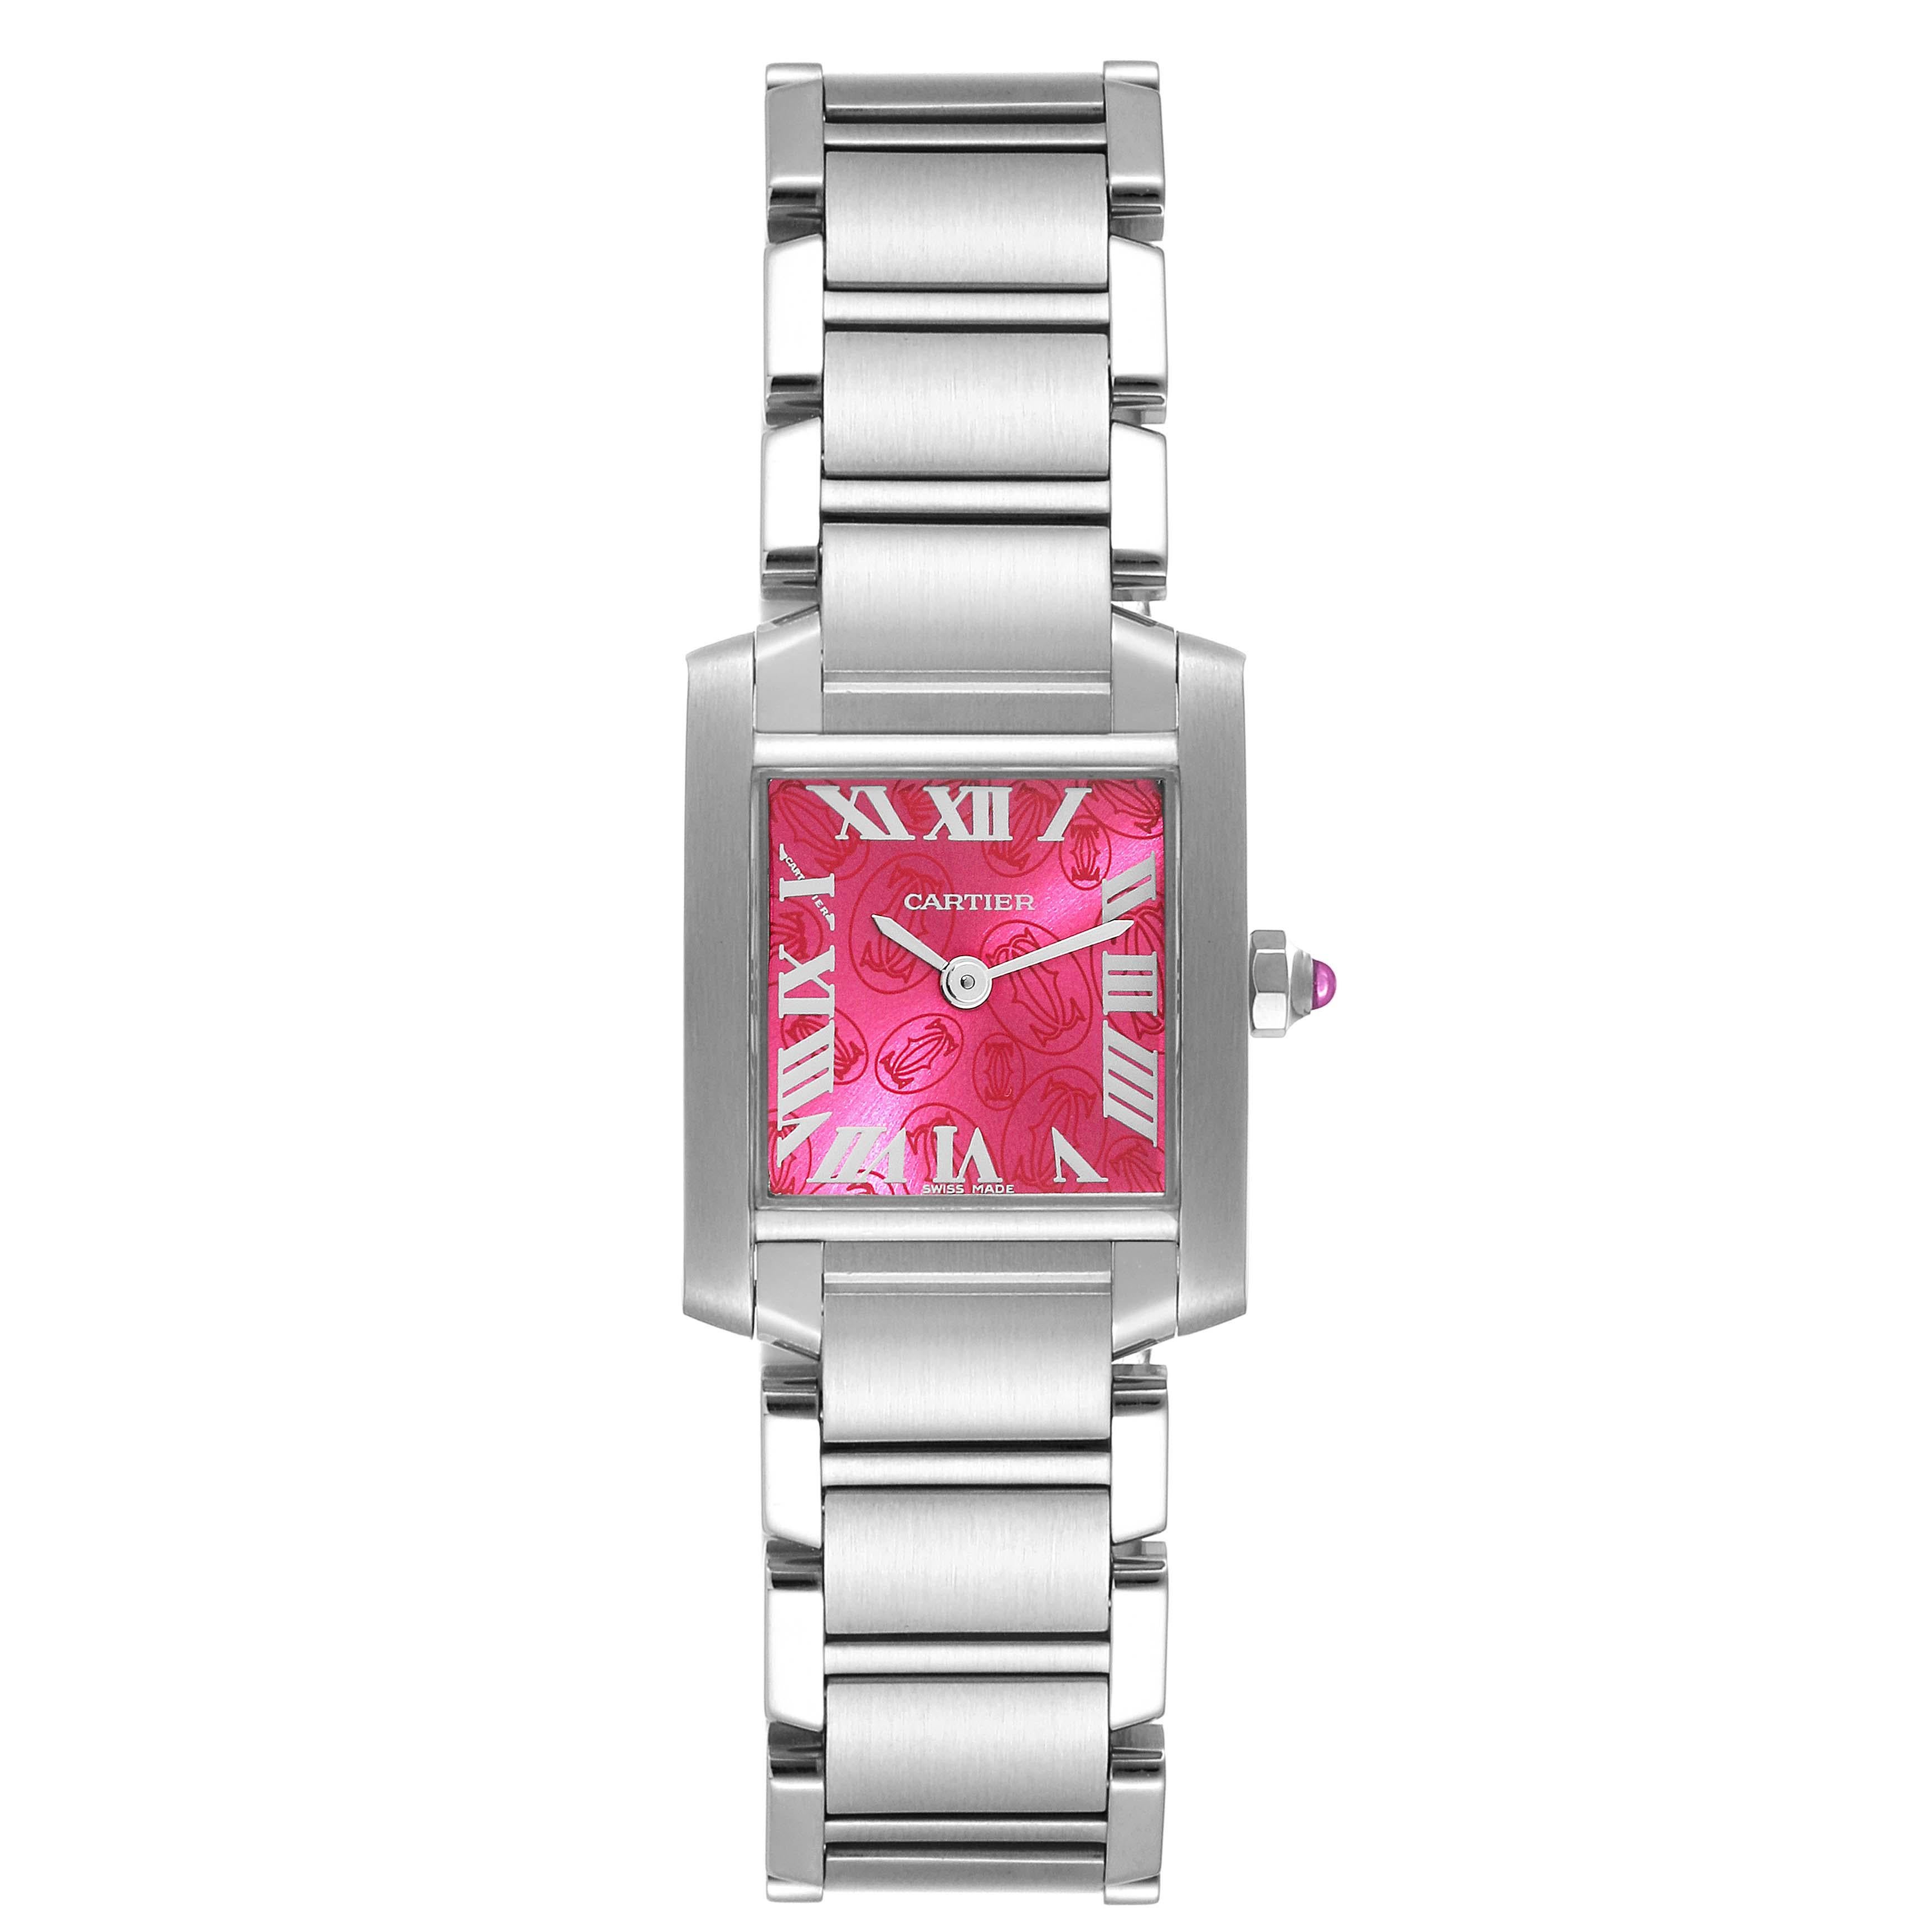 Cartier Tank Francaise Raspberry Dial LE Steel Ladies Watch W51030Q3 For Sale 3